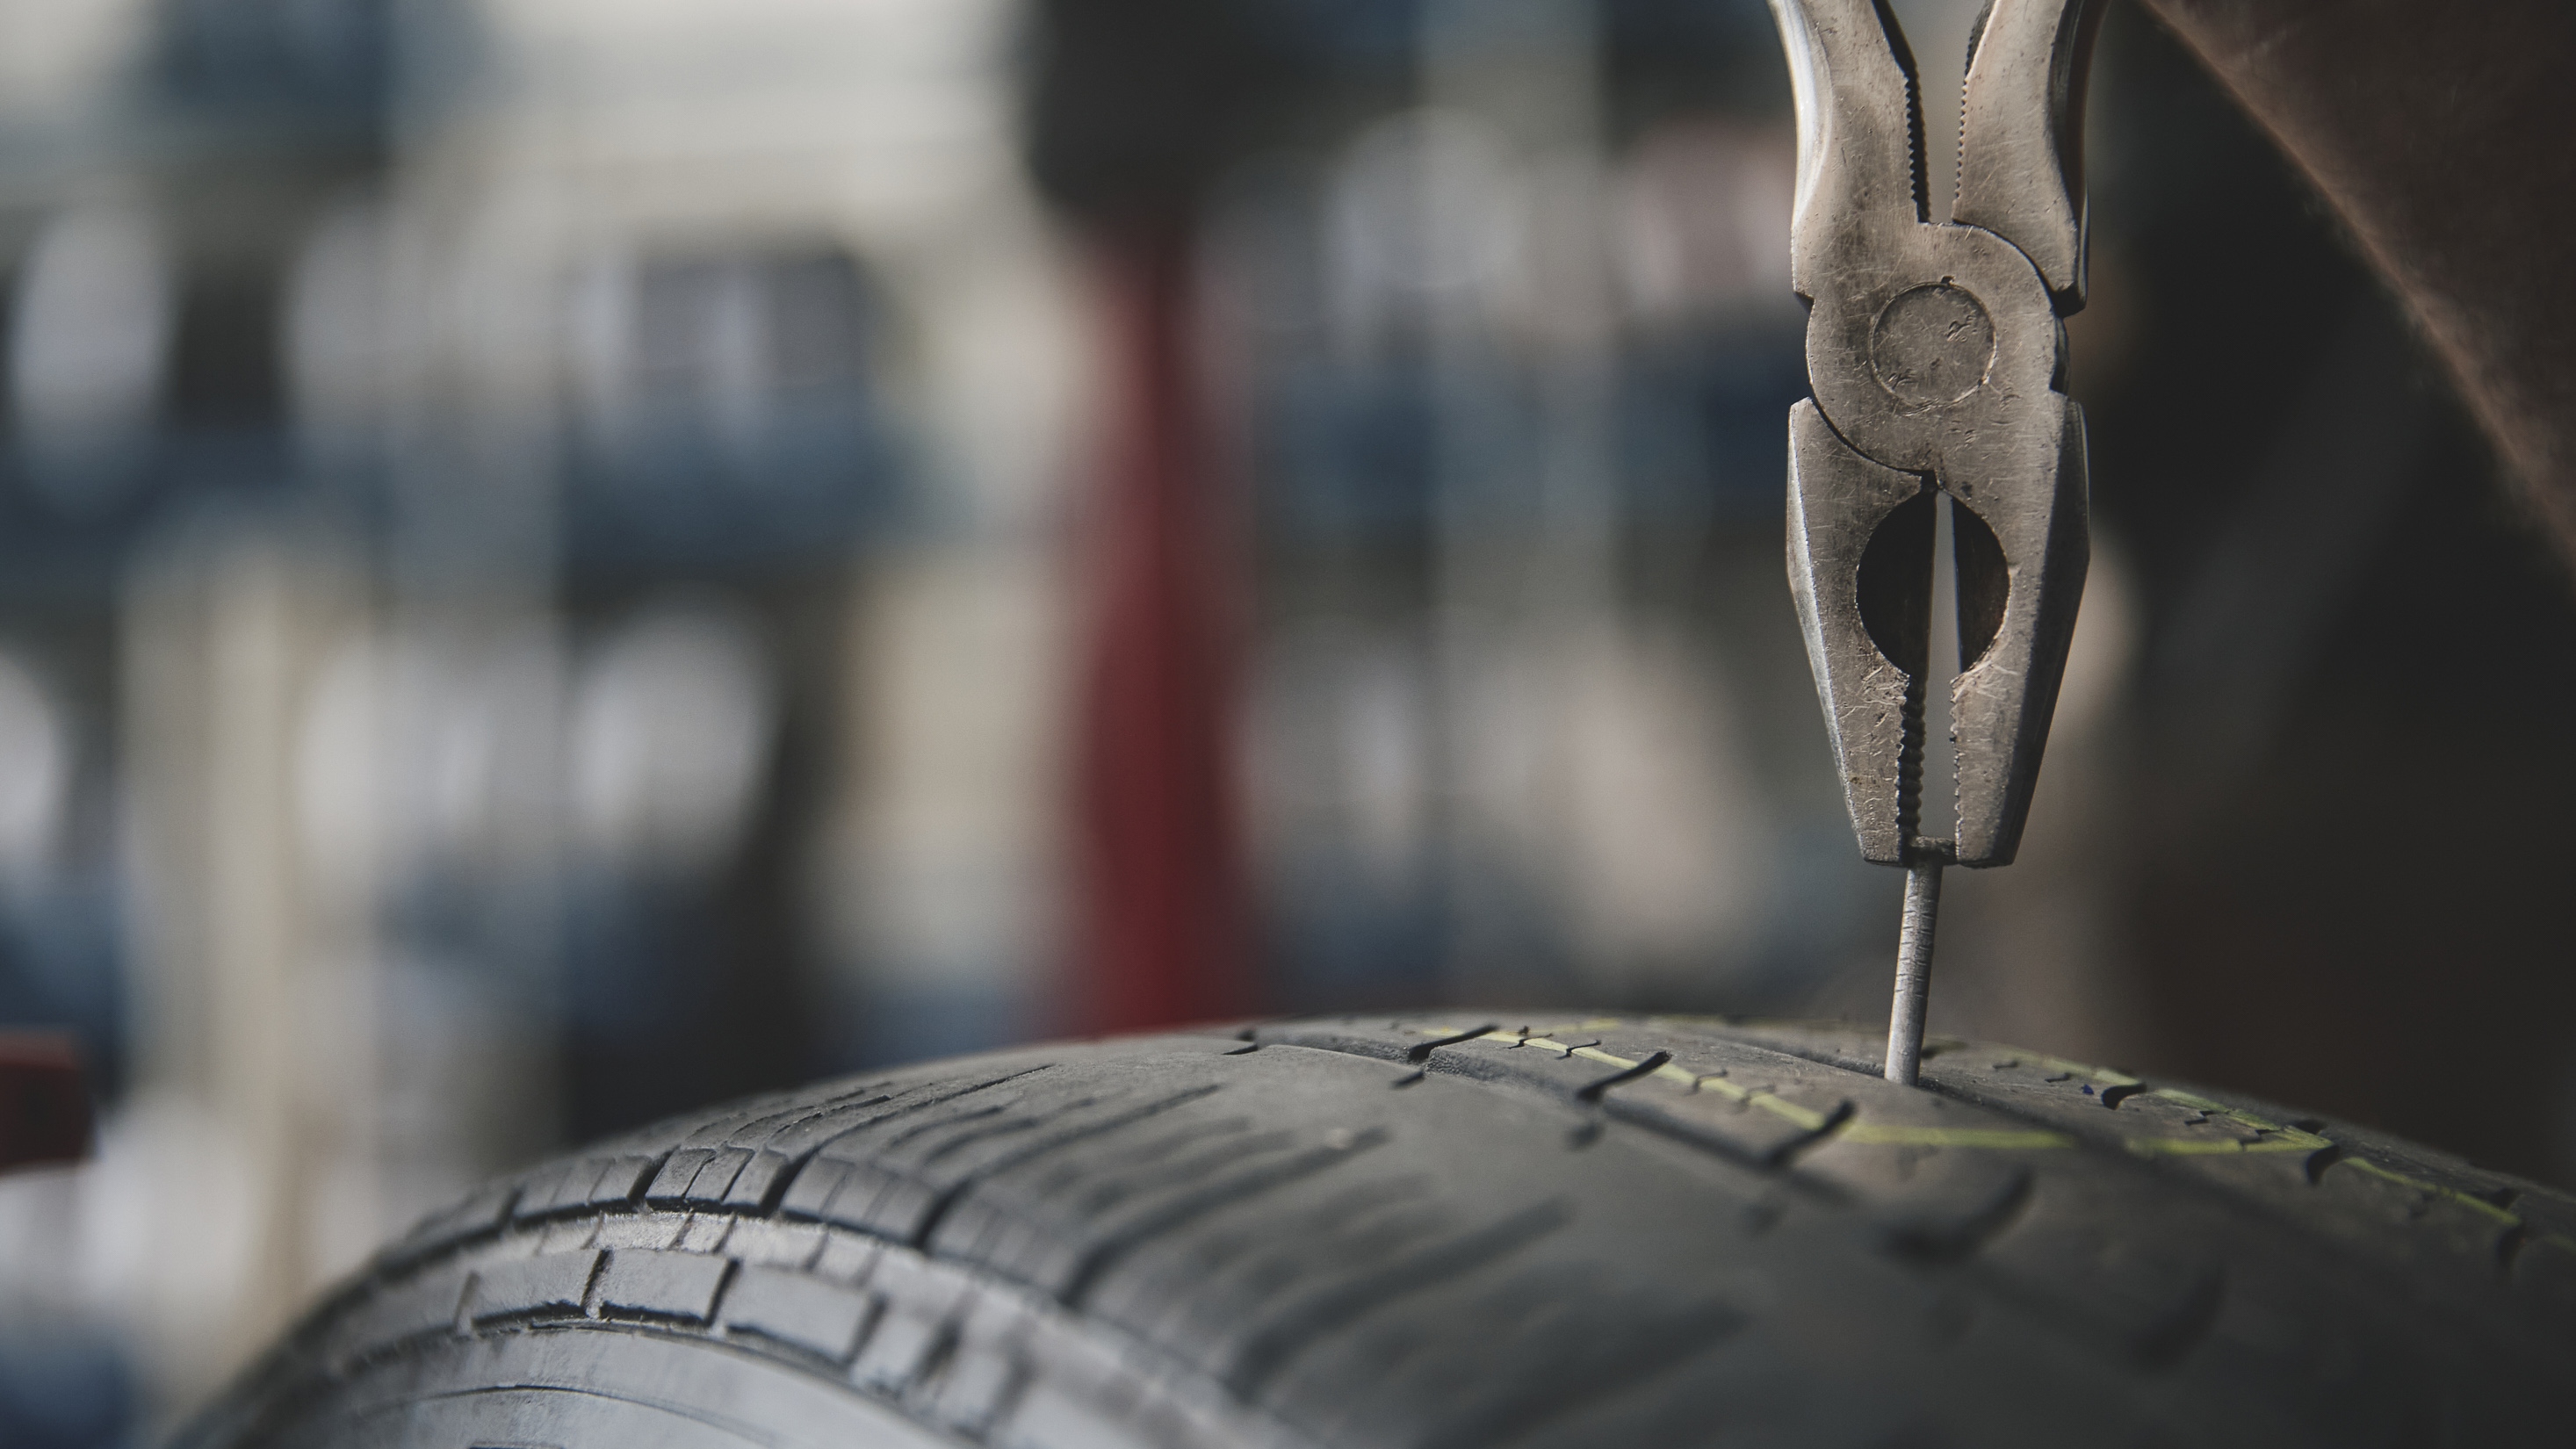 Tubeless Repair Nails Tire Puncture Repair Rubber Nails Sets 20pcs For Car  Truck | eBay